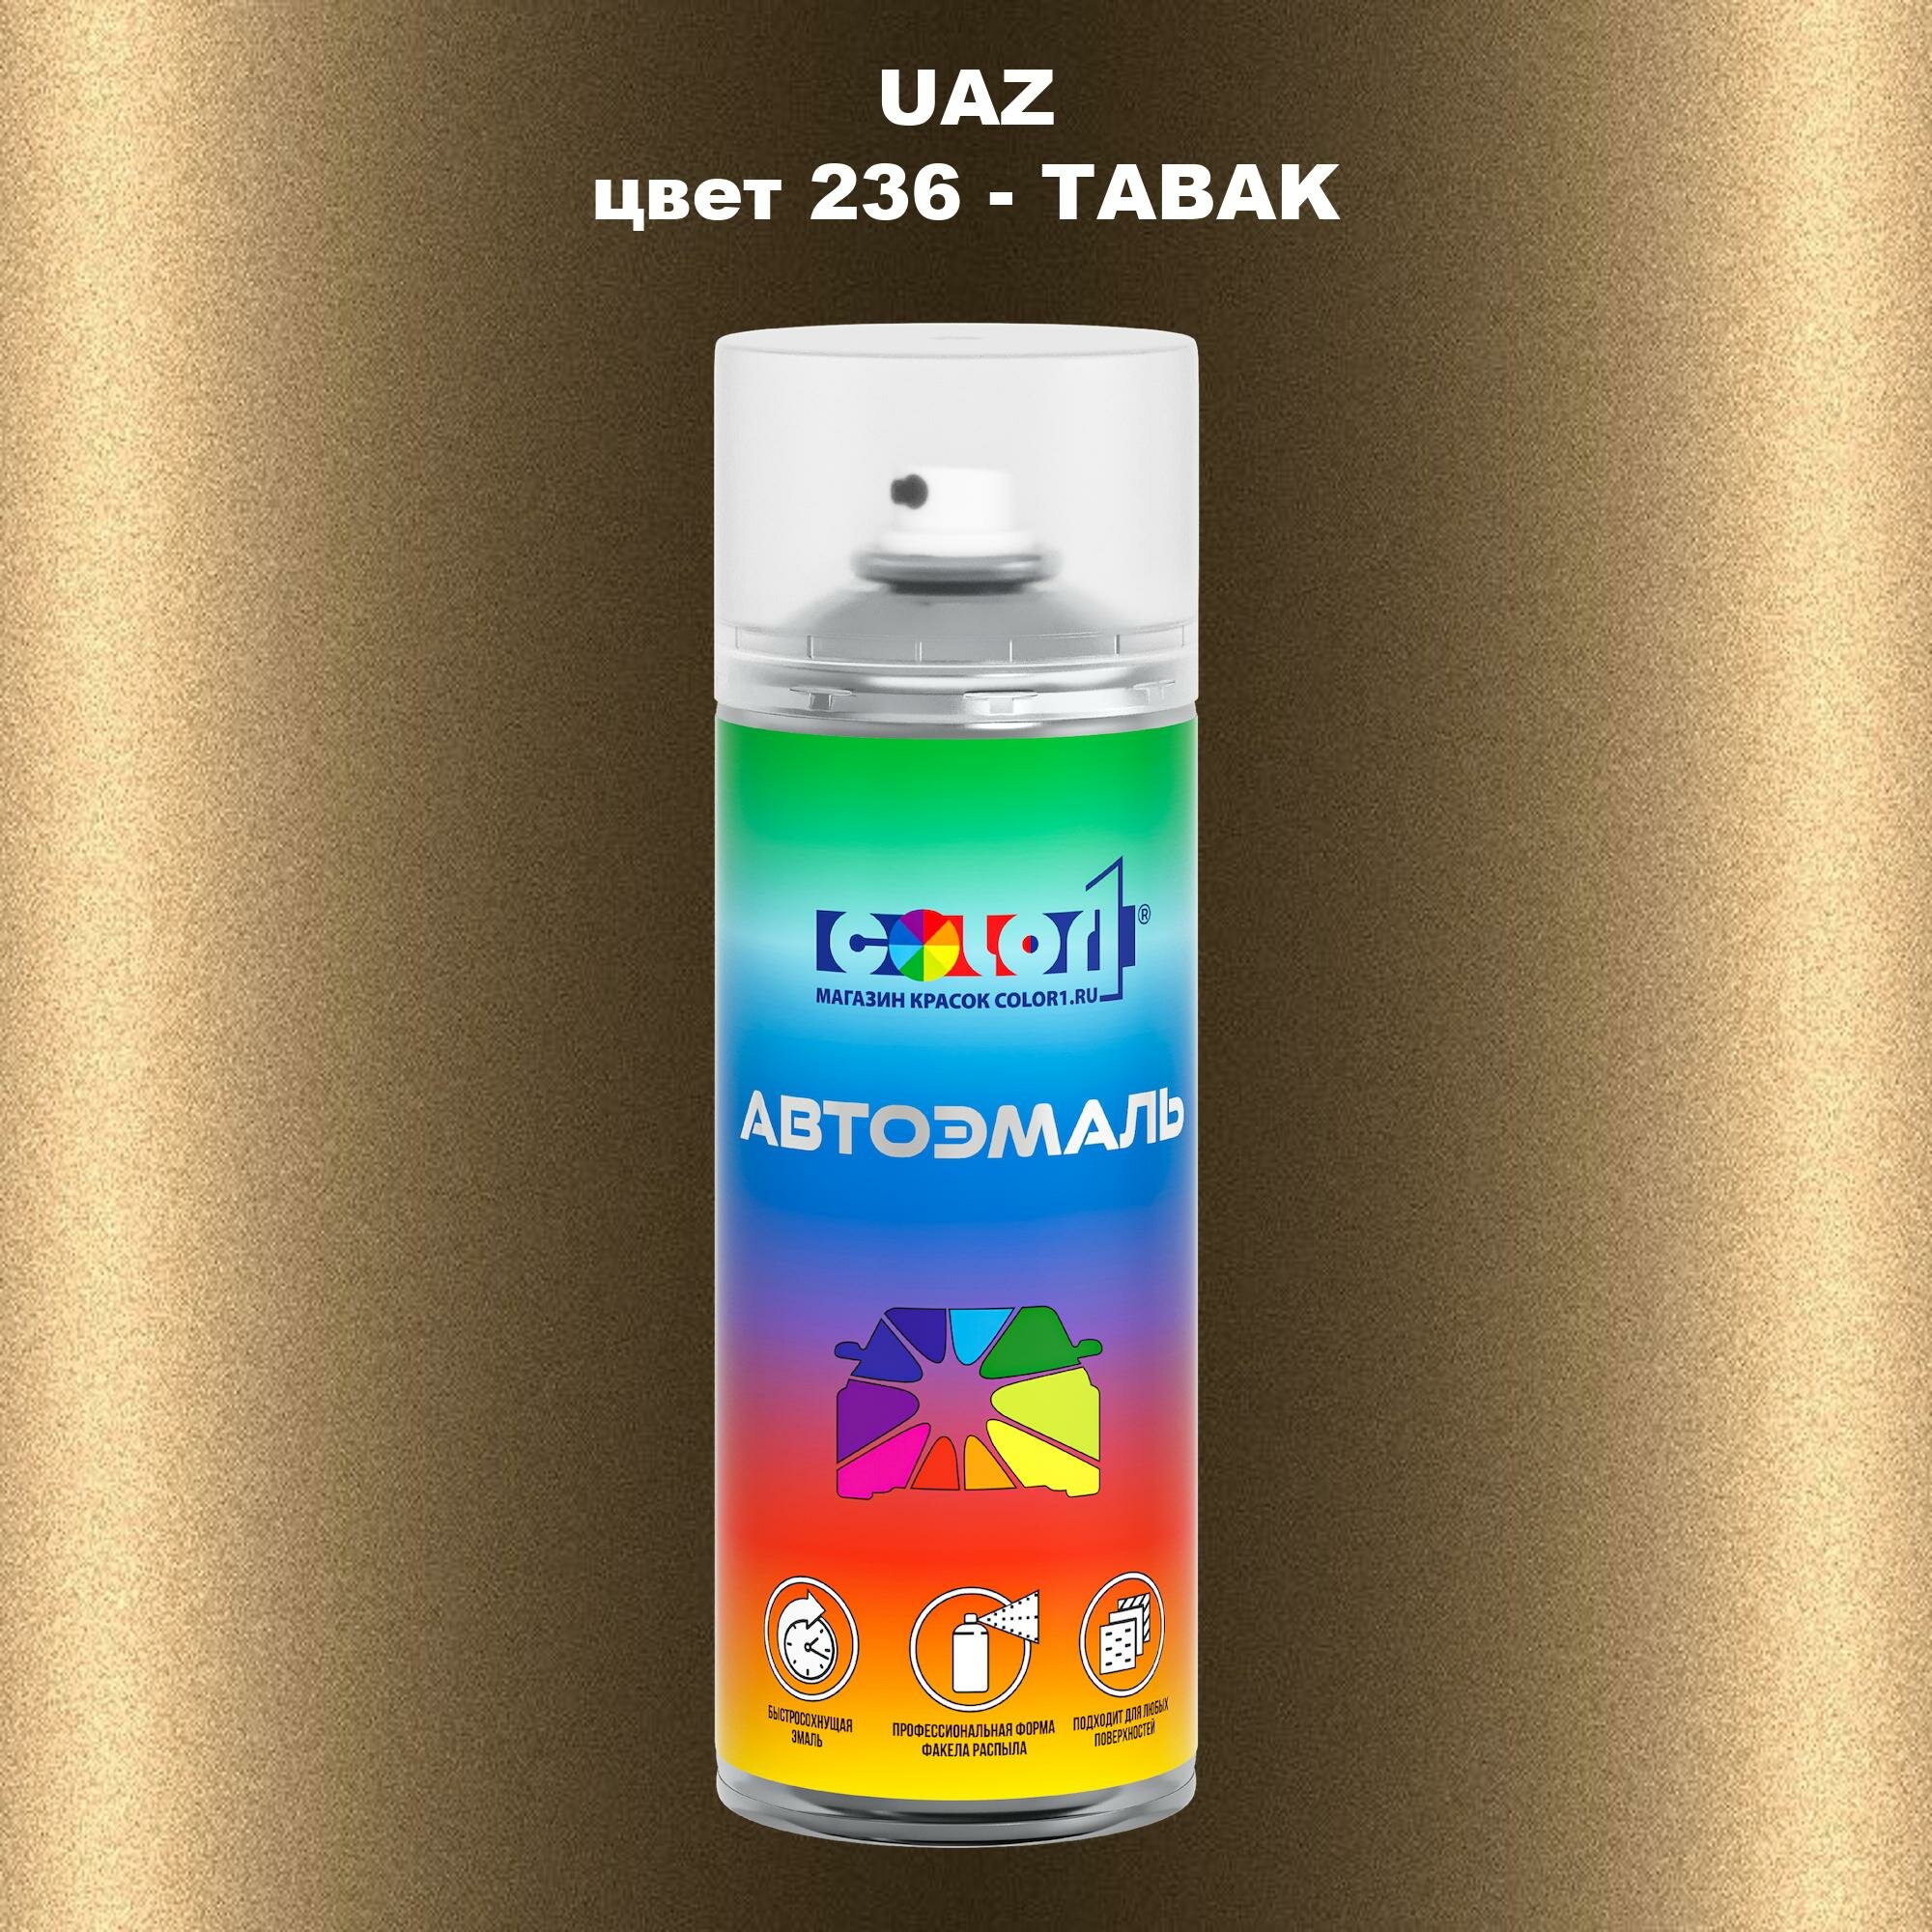 Аэрозольная краска COLOR1 для UAZ, цвет 236 - TABAK